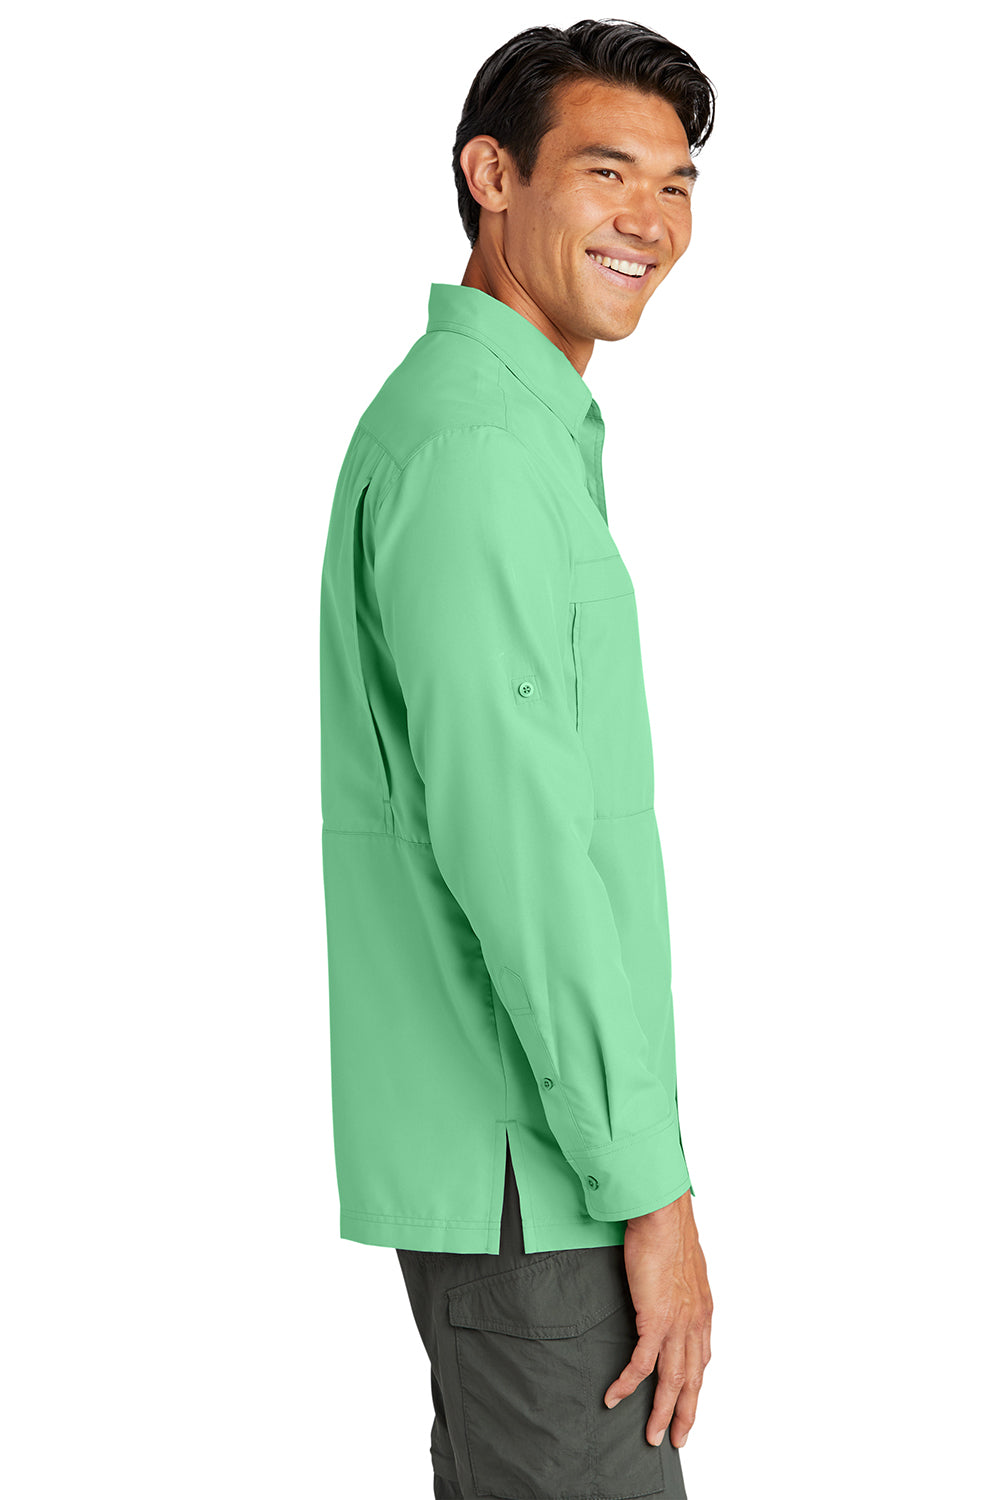 Port Authority W960 Mens Daybreak Moisture Wicking Long Sleeve Button Down Shirt w/ Double Pockets Bright Seafoam Green SIde